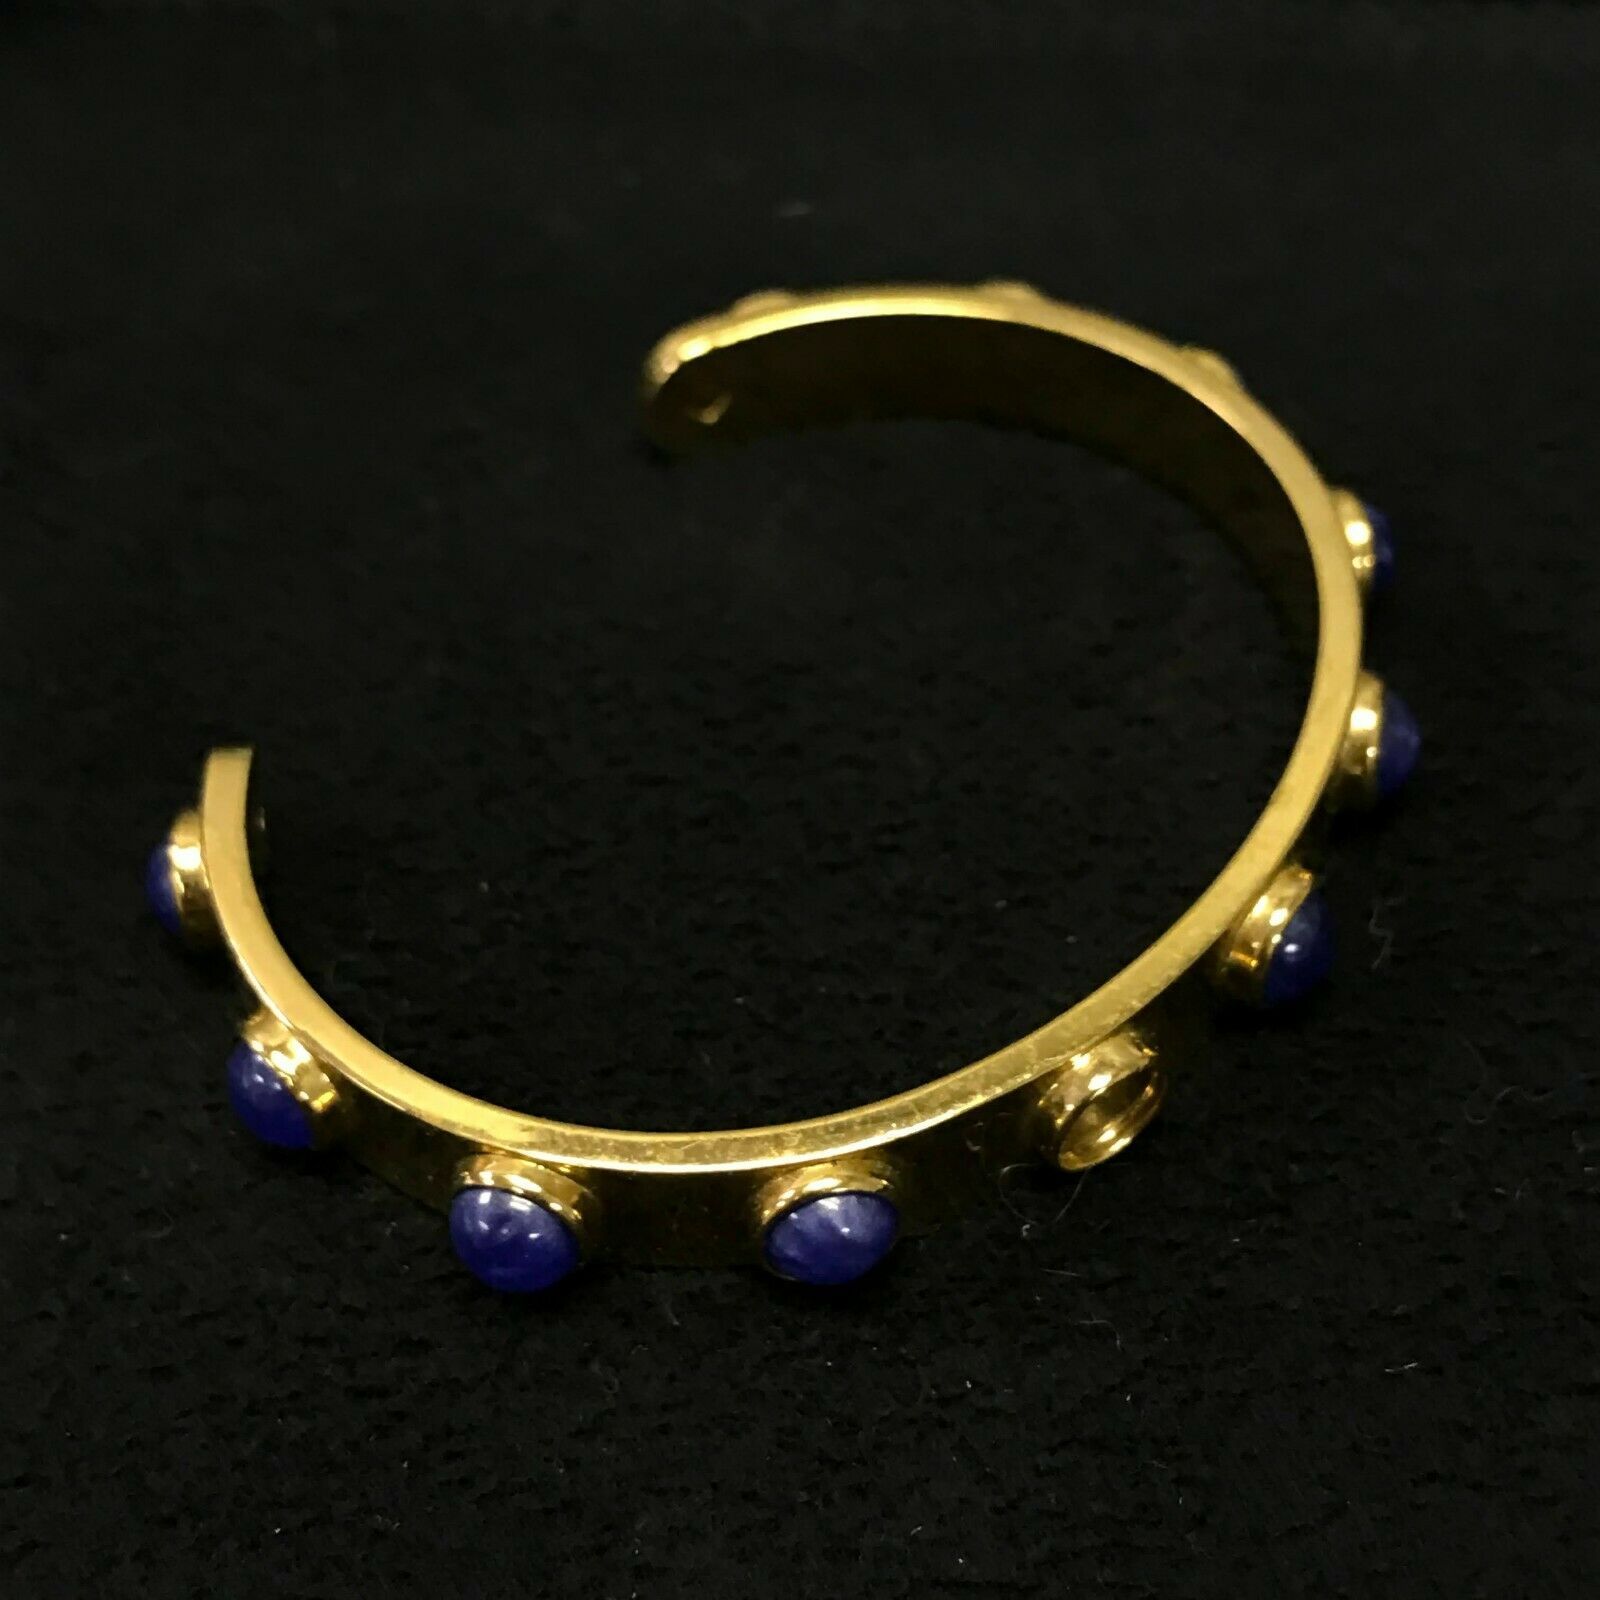 Kate Spade Cuff Bracelet Gold Tone with Round Blue Stones 2 1/4" Diameter - $14.01